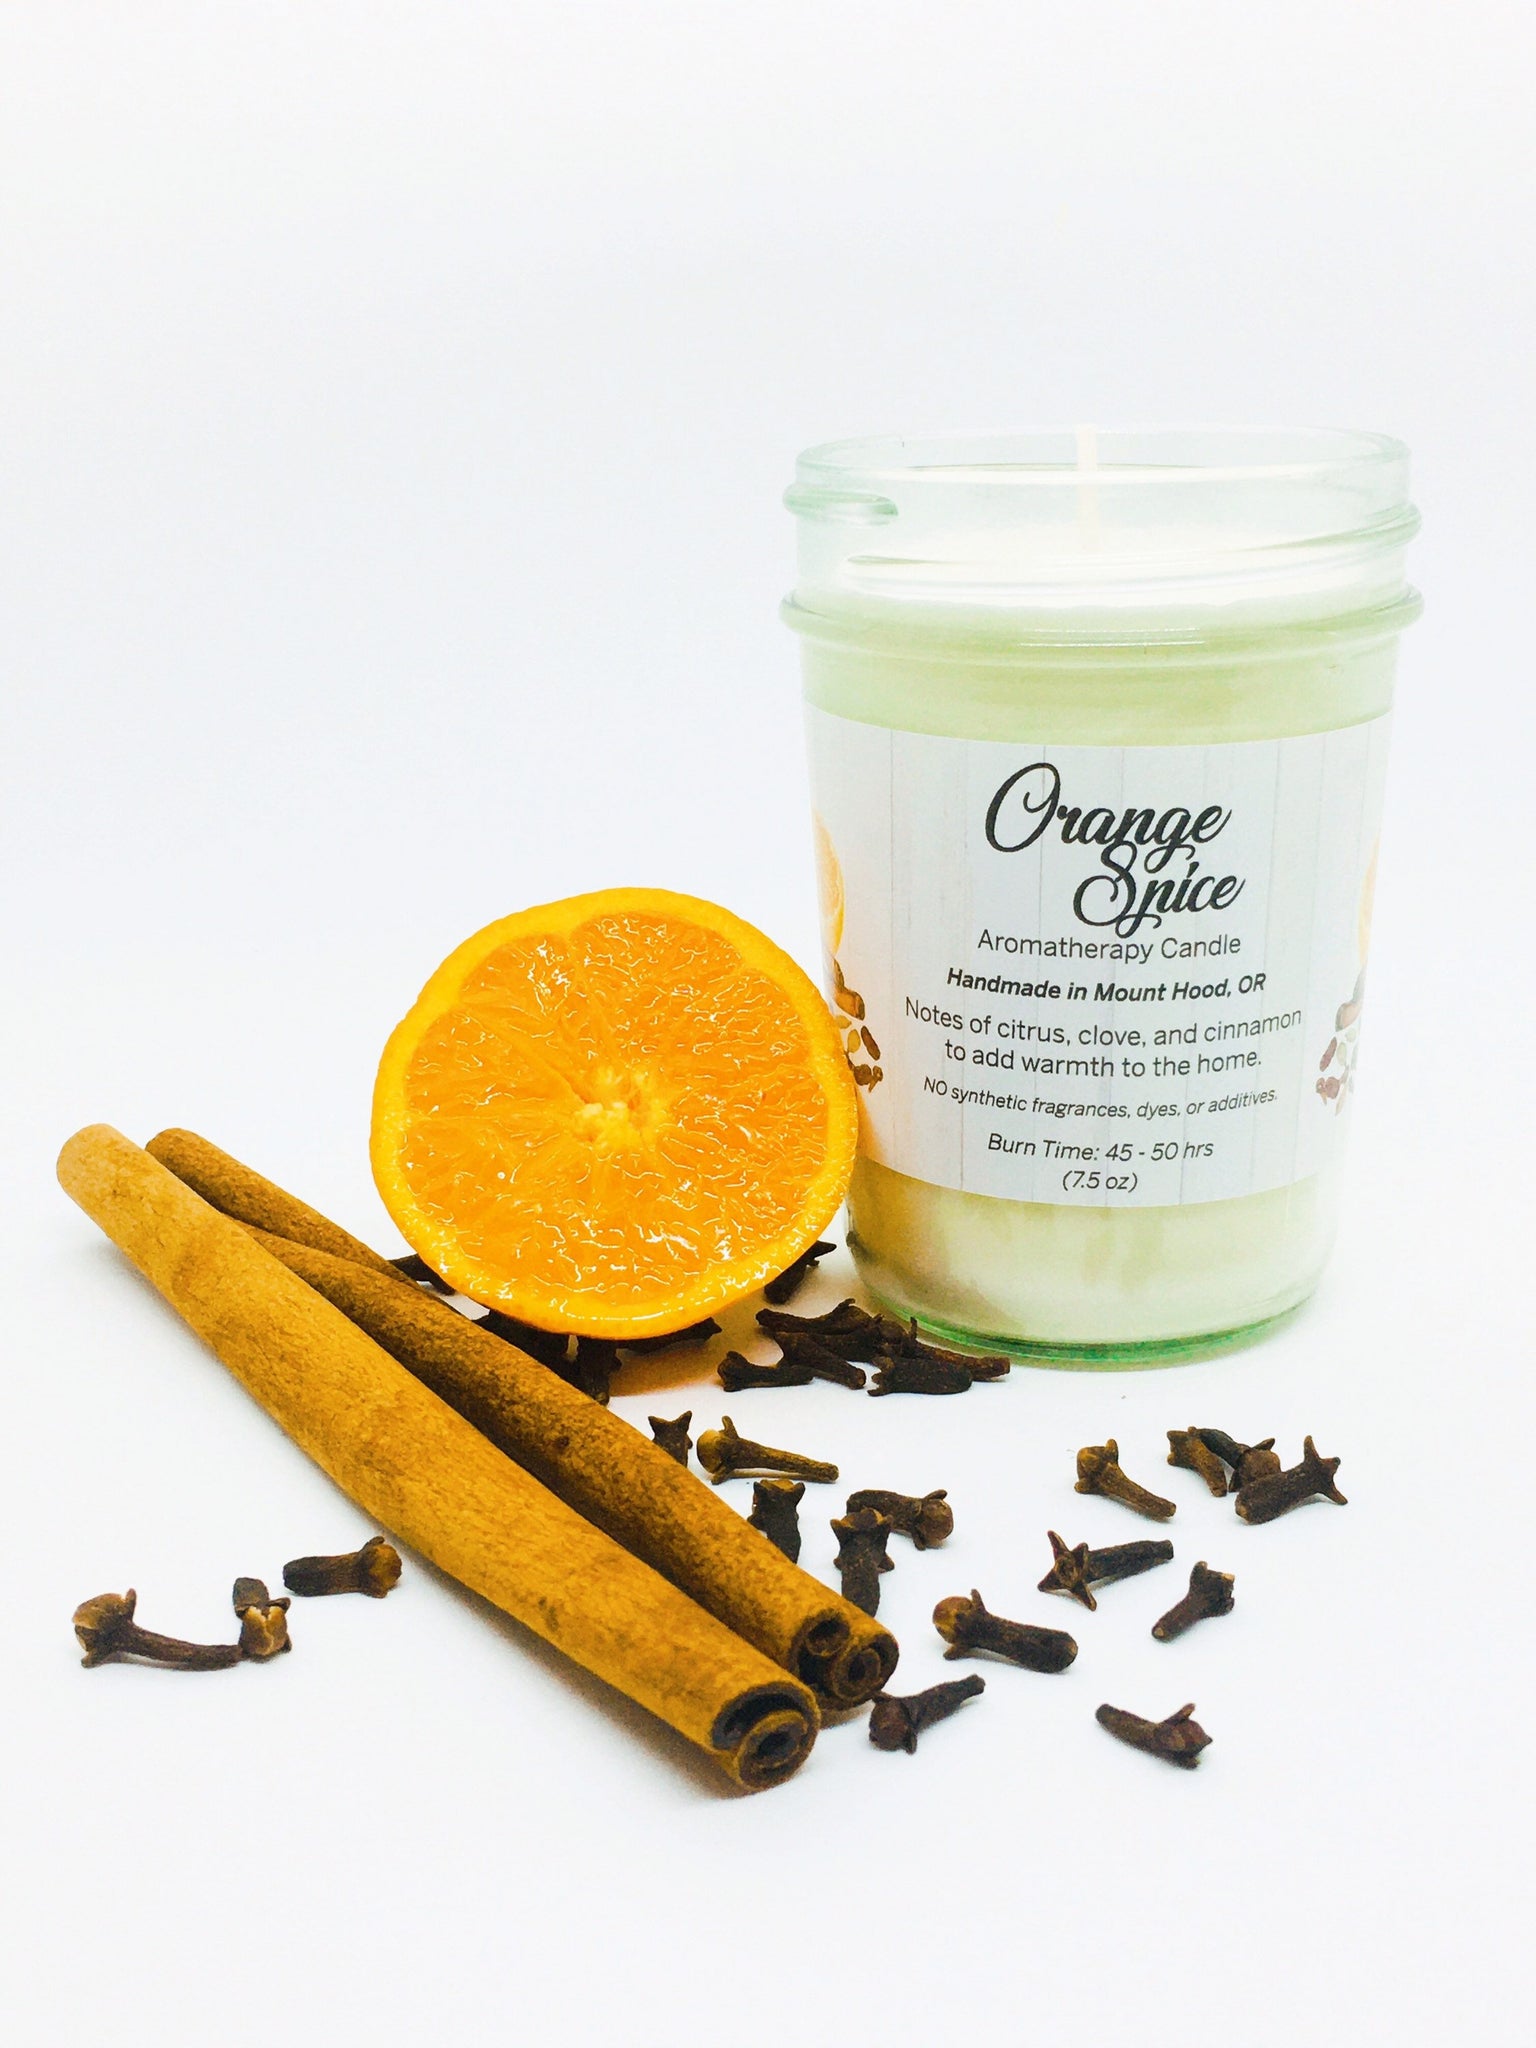 Orange Spice|Soy Candle|Aromatherapy Candle